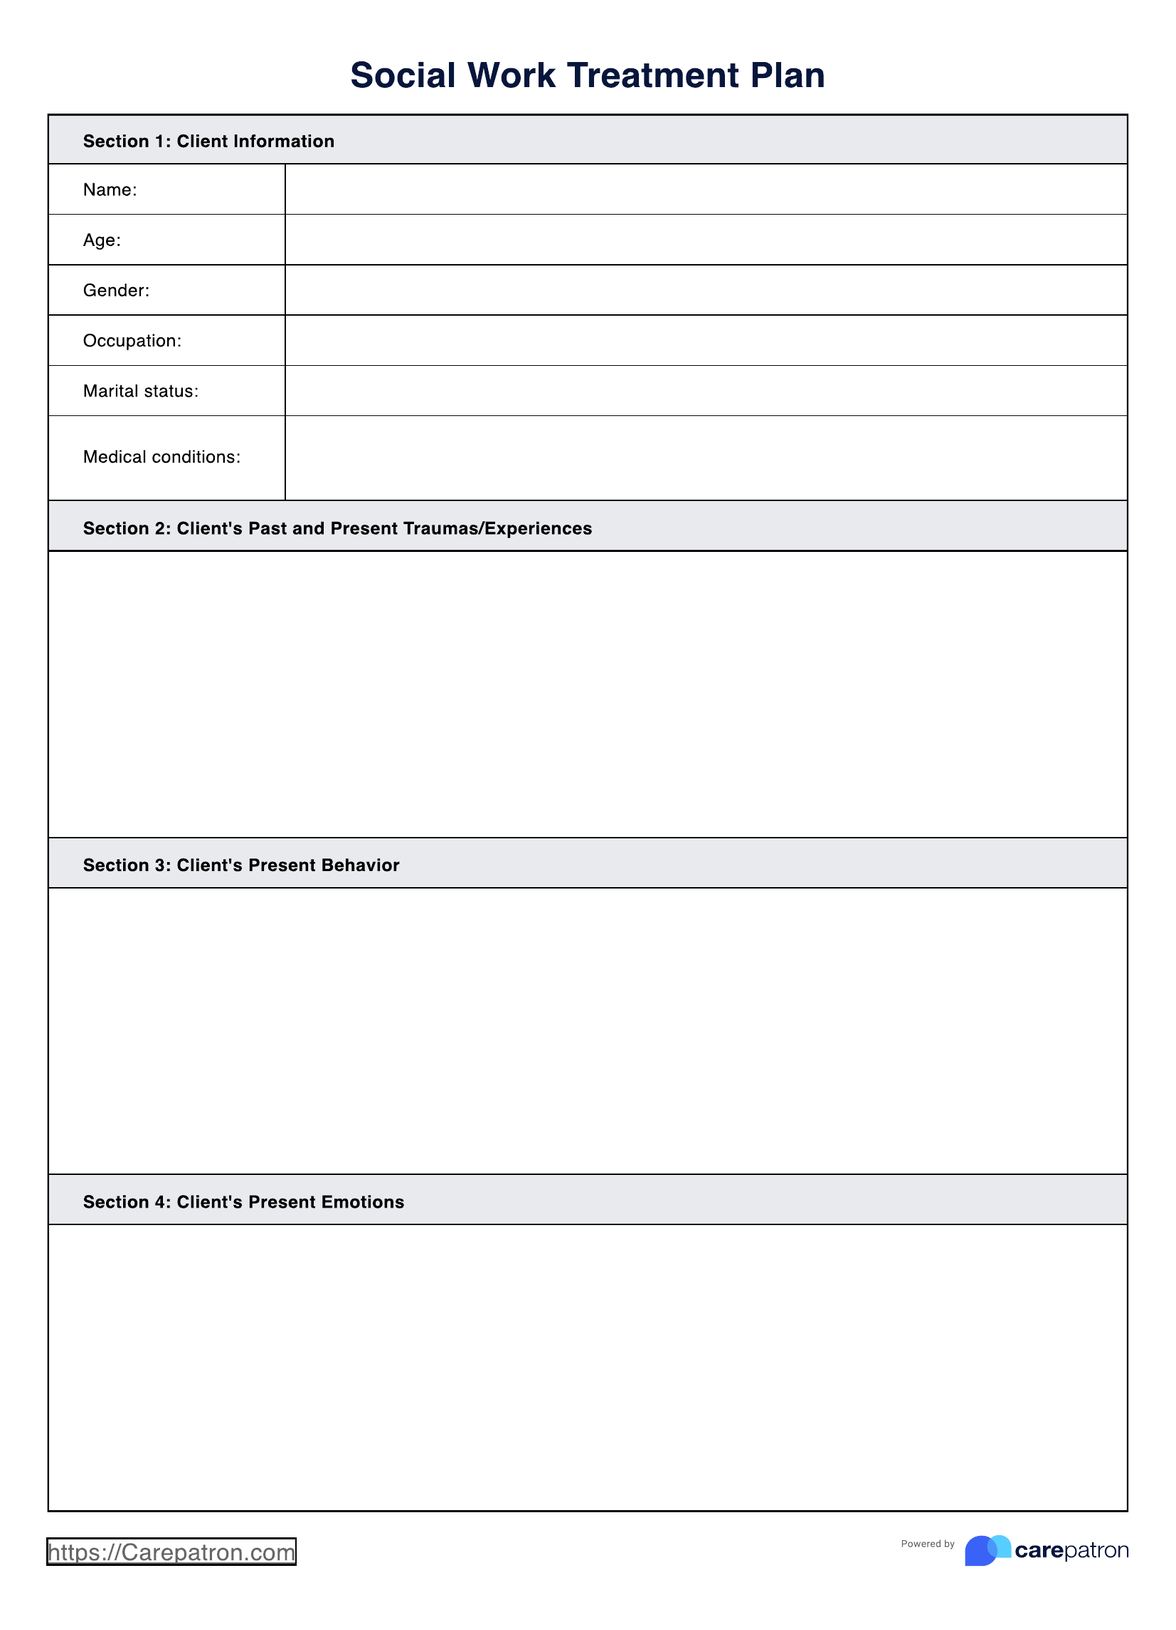 Social Work Treatment Plans PDF Example